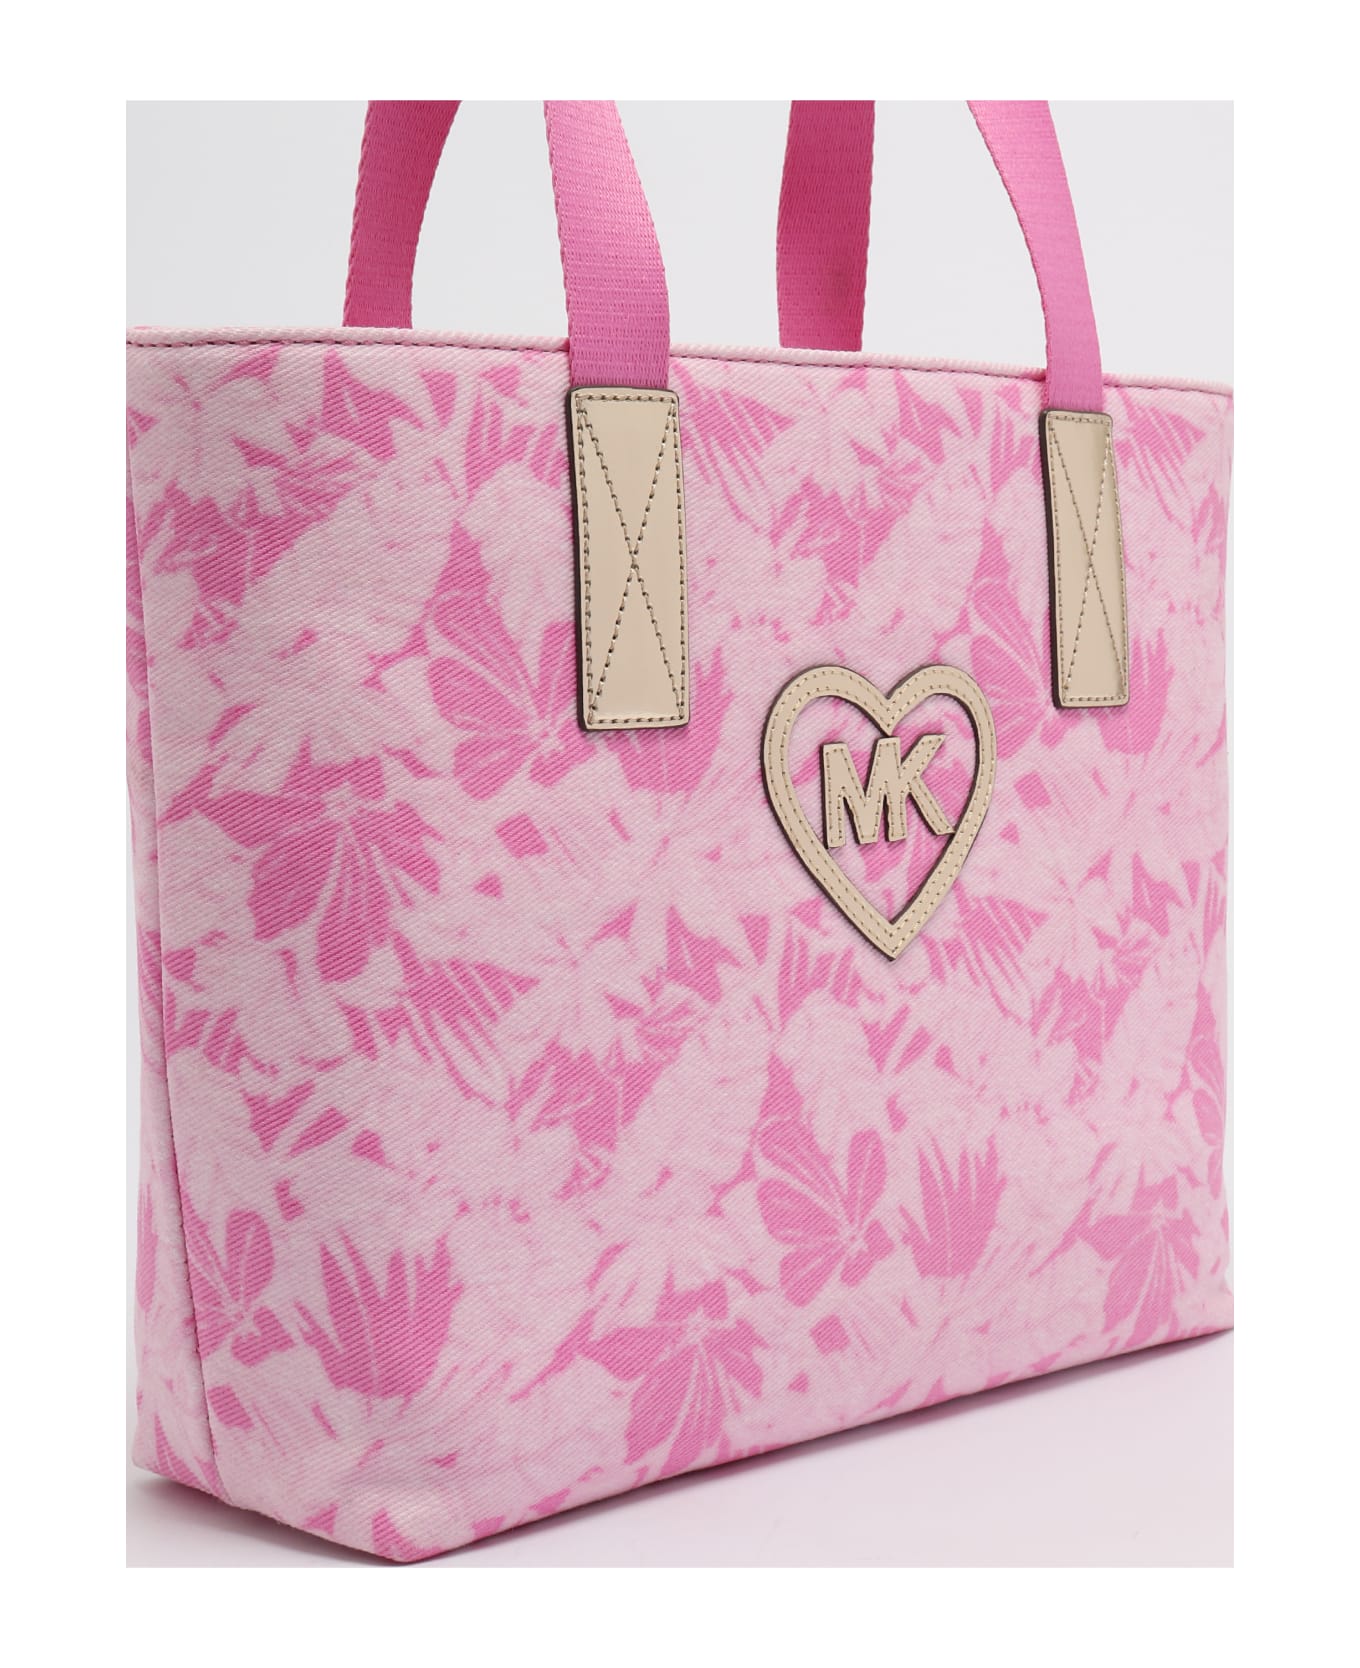 Michael Kors Shopping Bag Shopping Bag - ROSA-FUCSIA